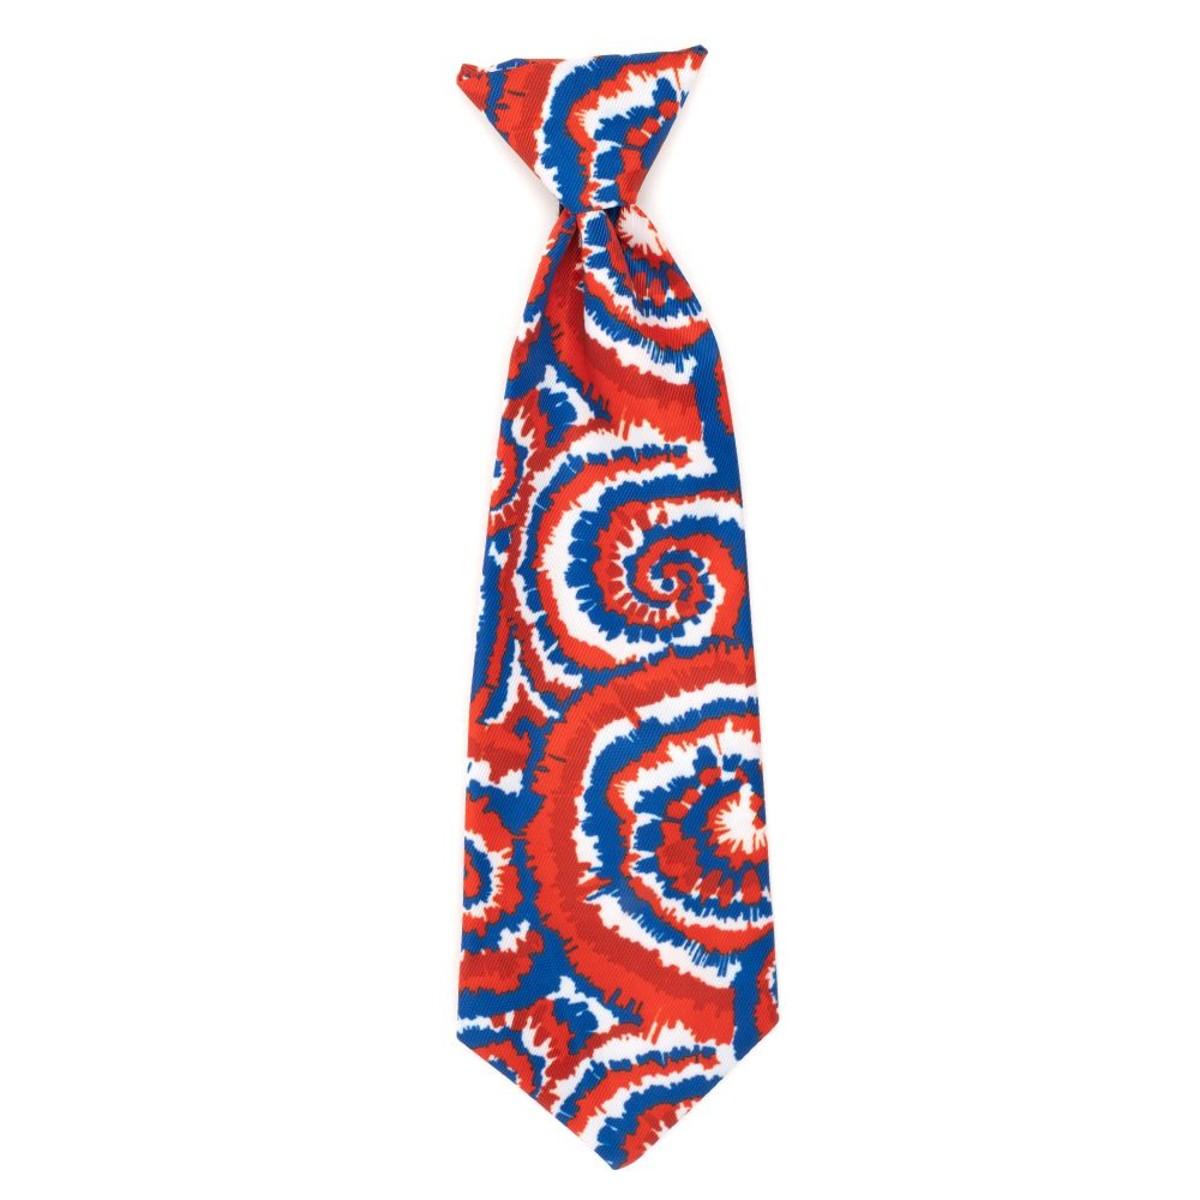 Worthy Dog Kaleidoscope Tie-Dye Dog and Cat Long Neck Tie Collar Attachment - Patriotic